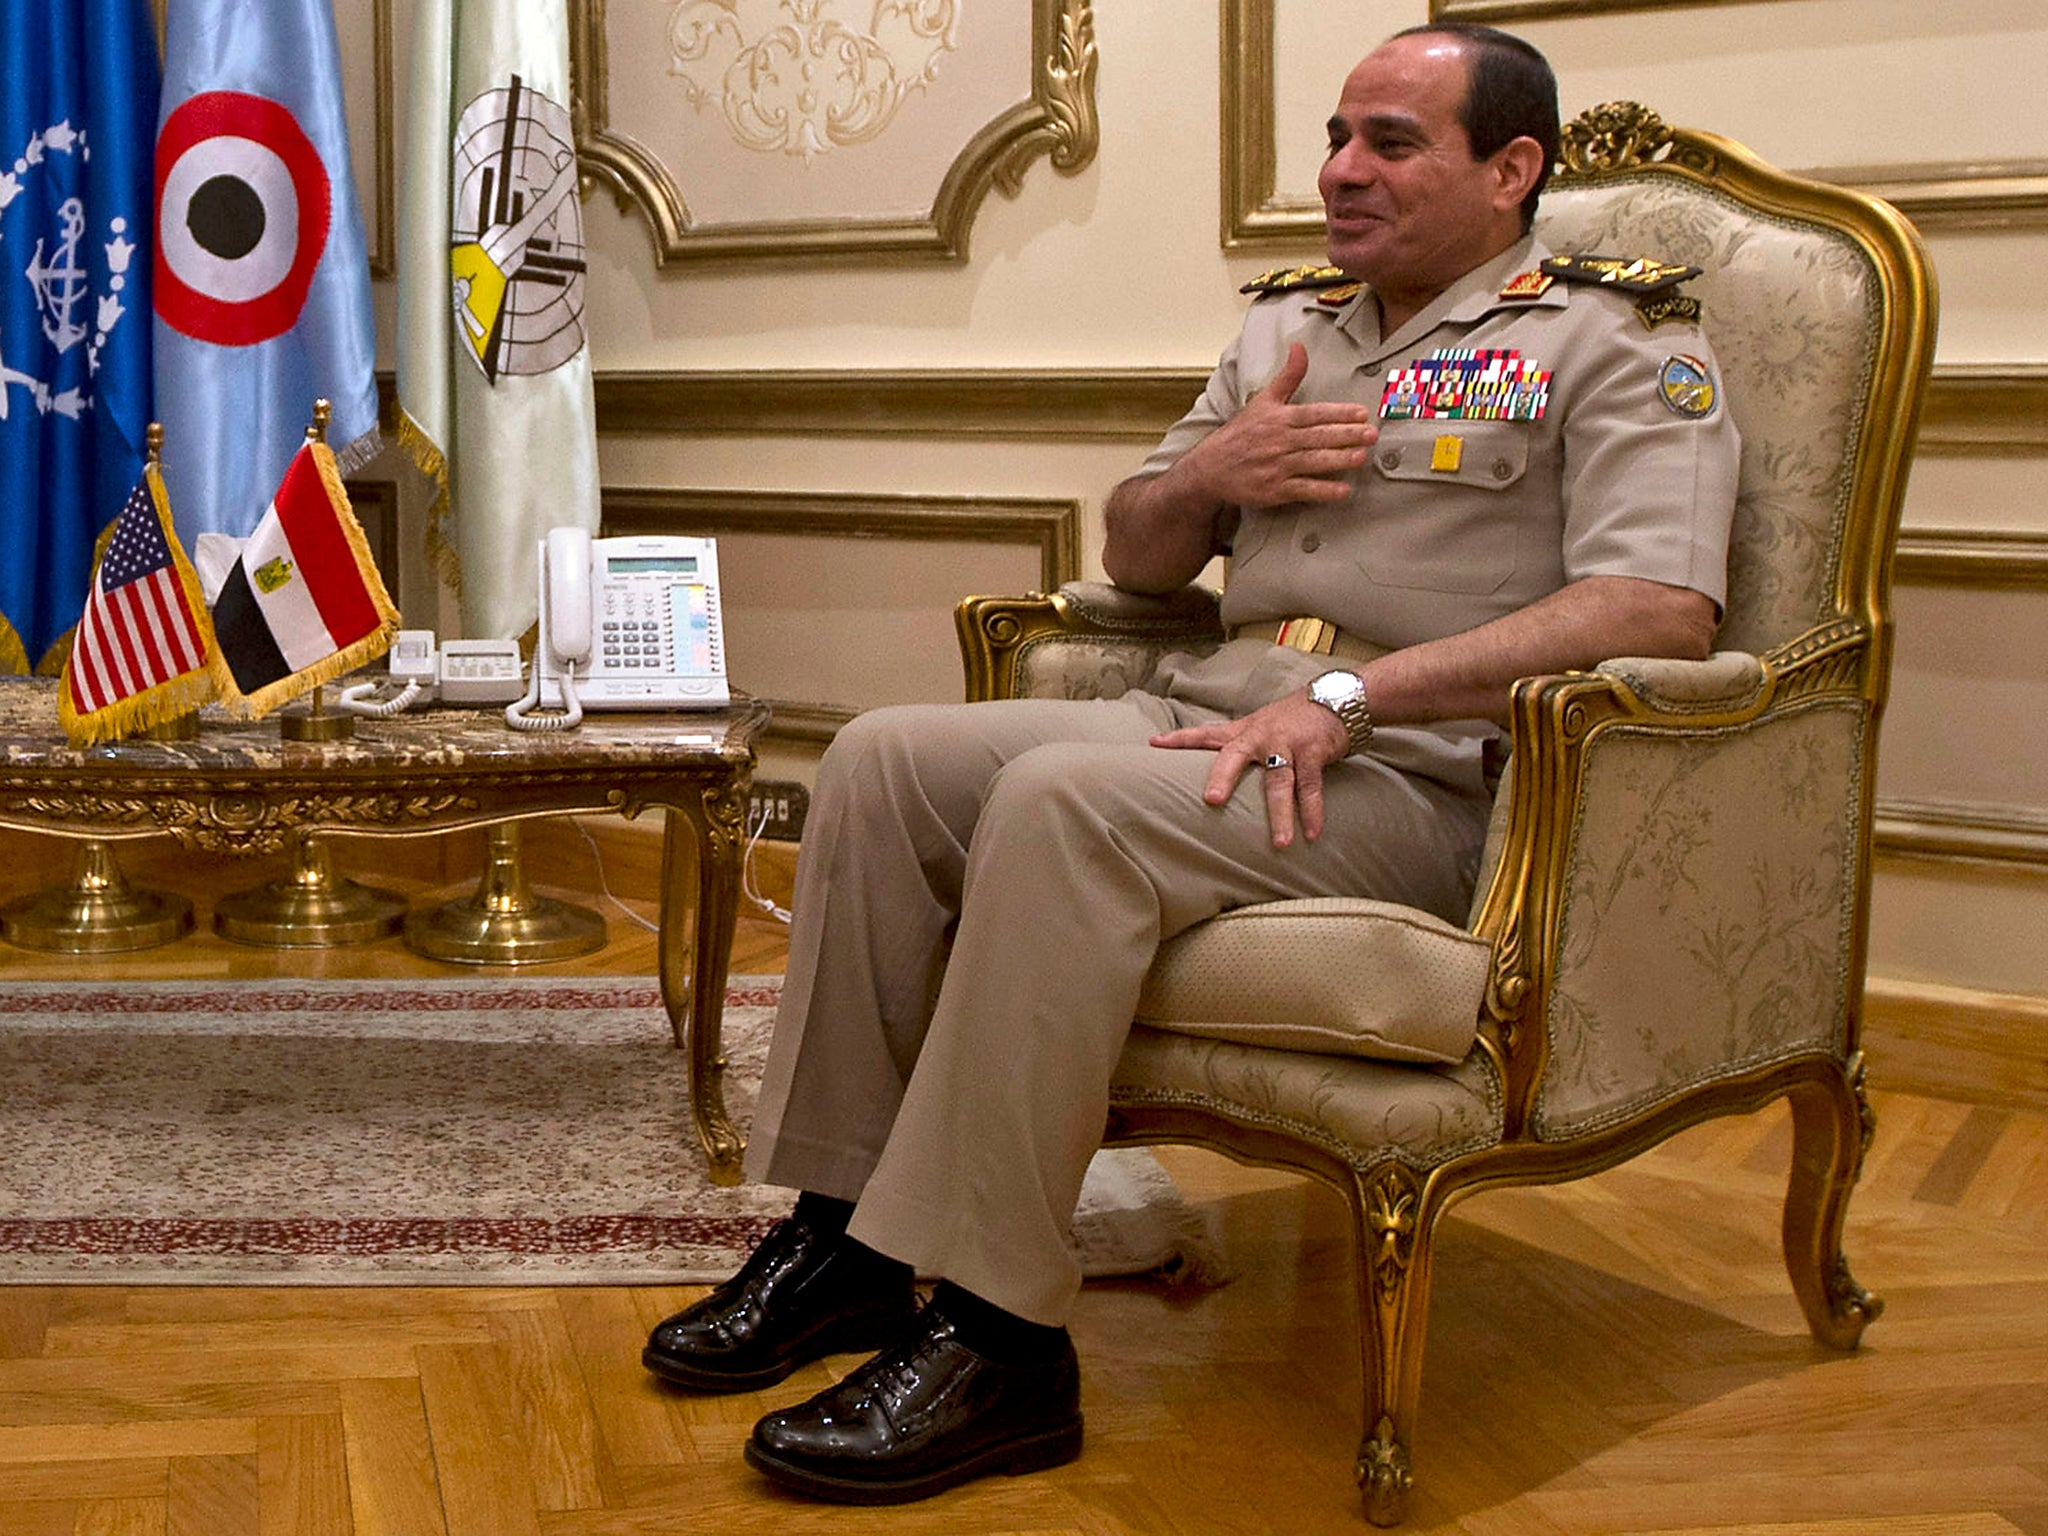 Many believed General Abdel Fatah el-Sisi was ‘sent from heaven’